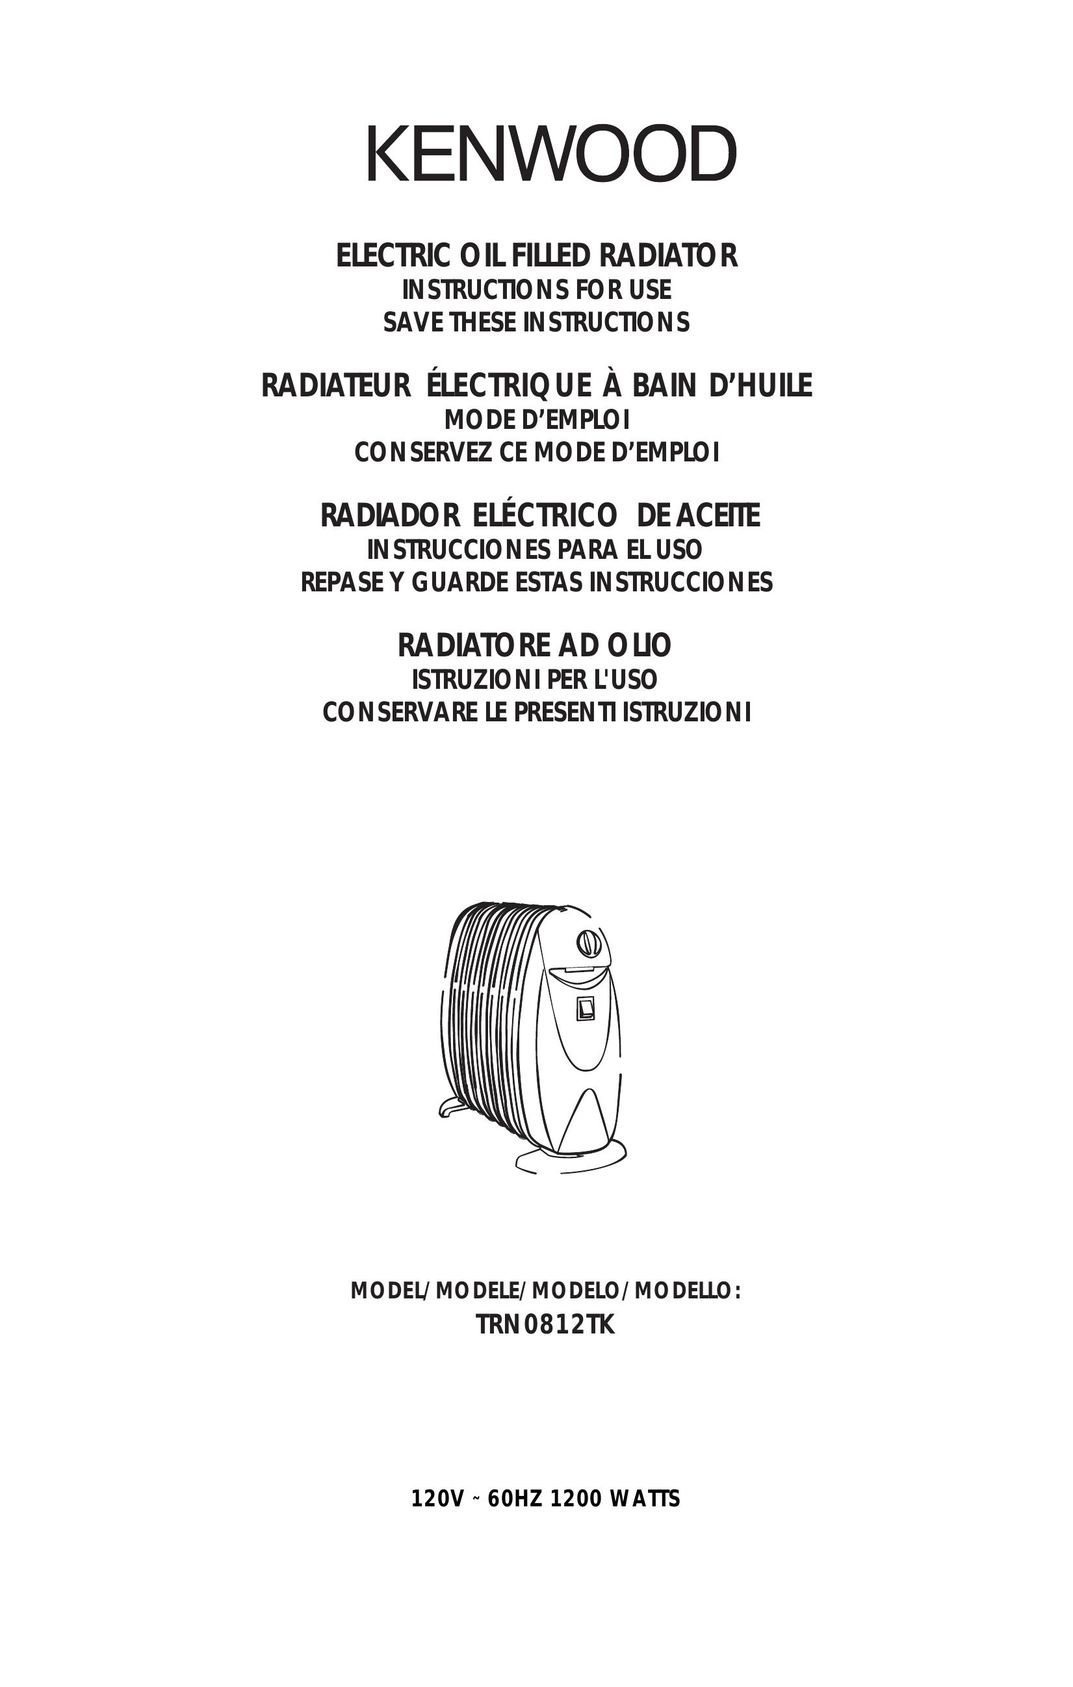 Kenwood trn0812tk Electric Heater User Manual